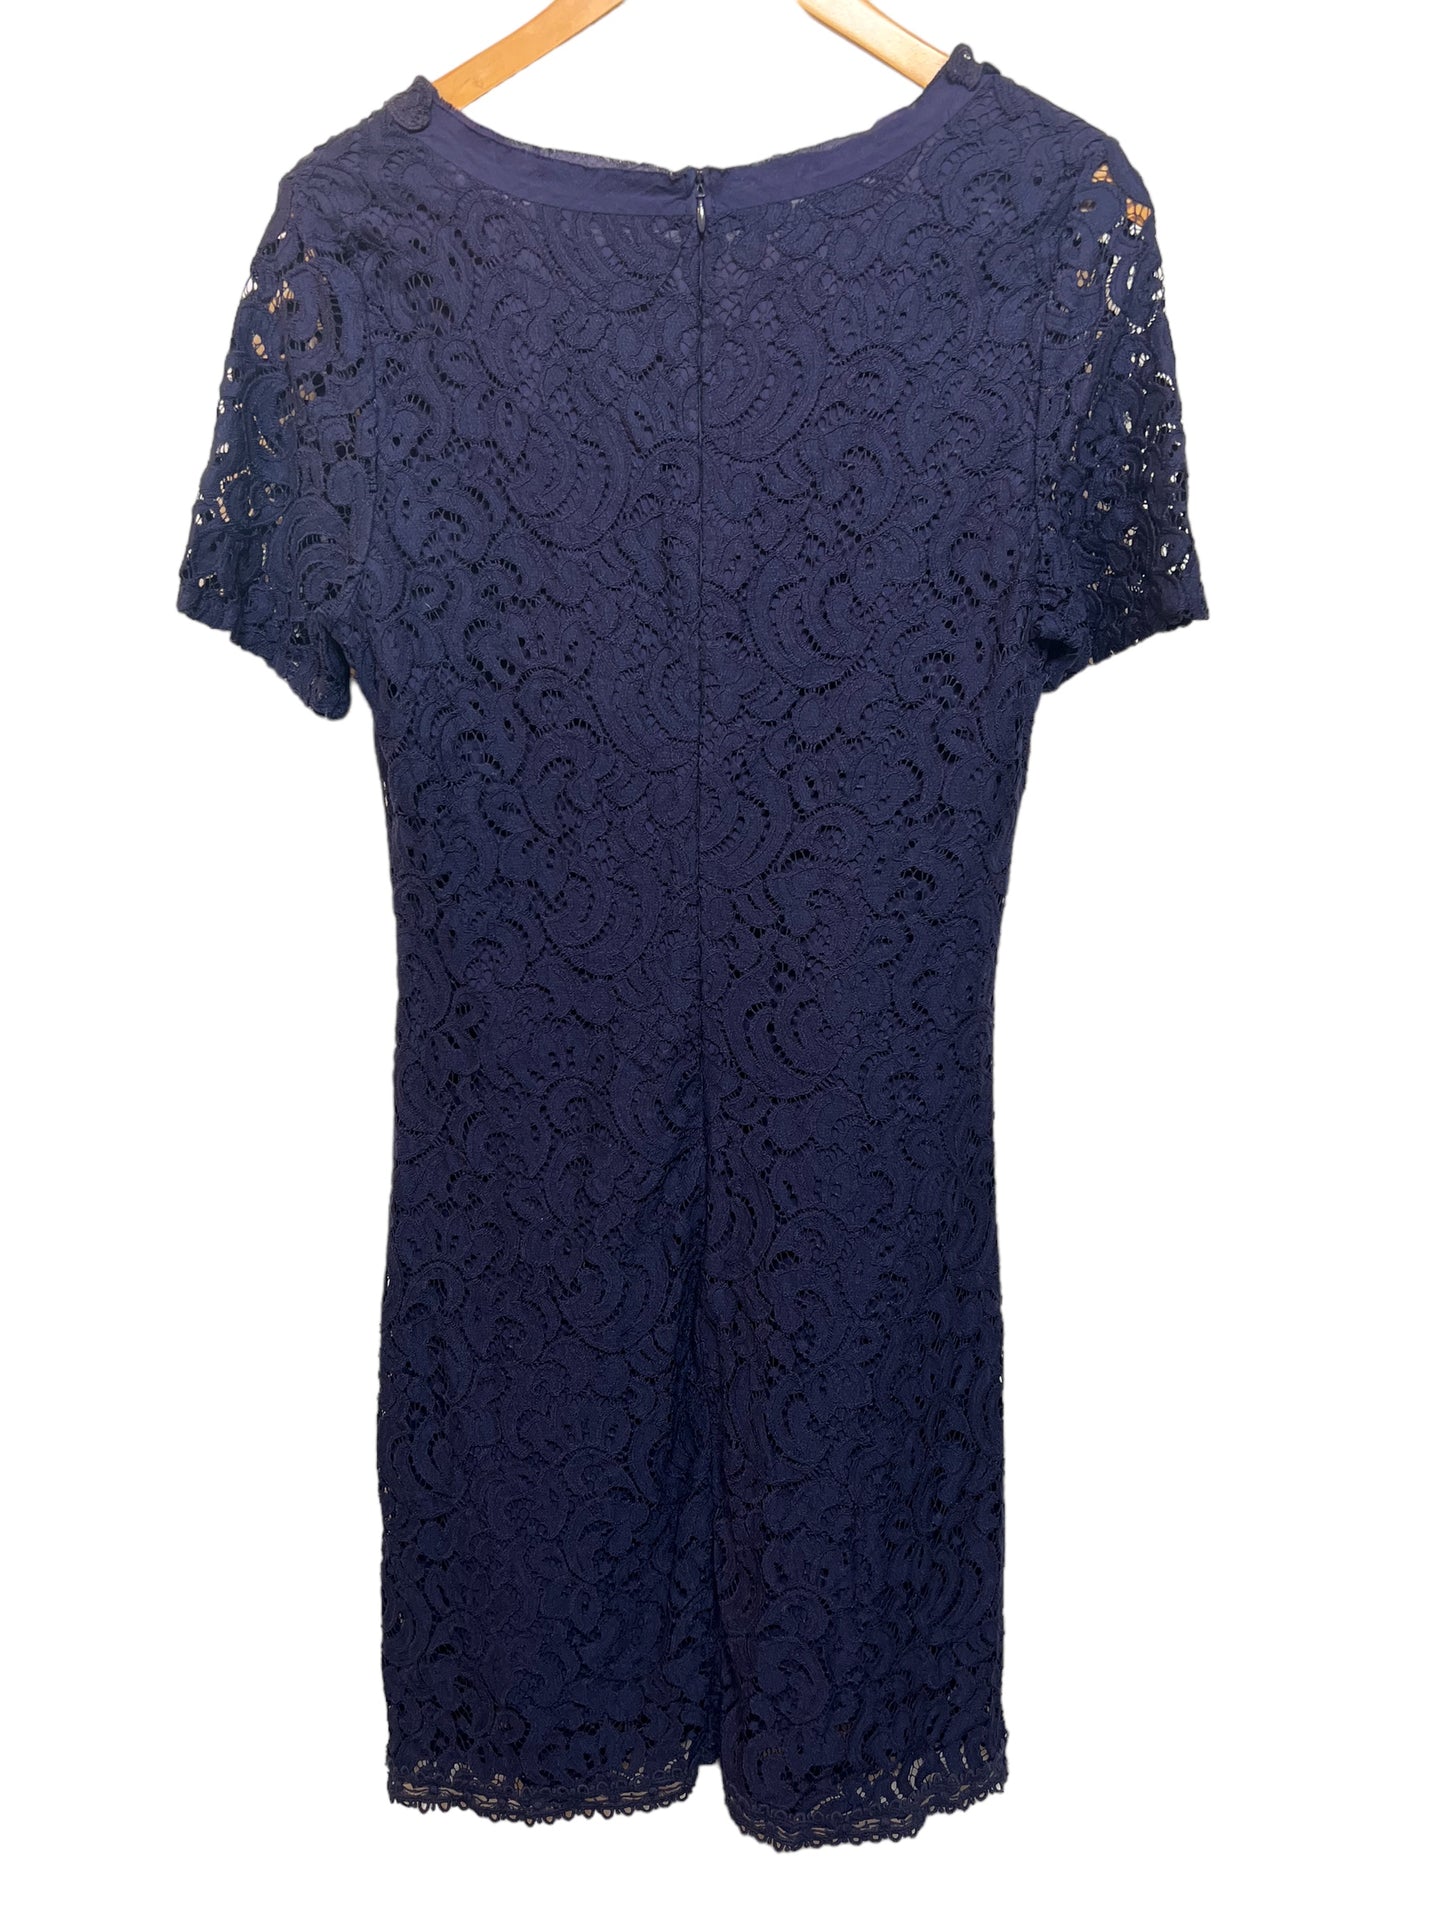 Cream Women’s Navy Blue Dress (Size L)